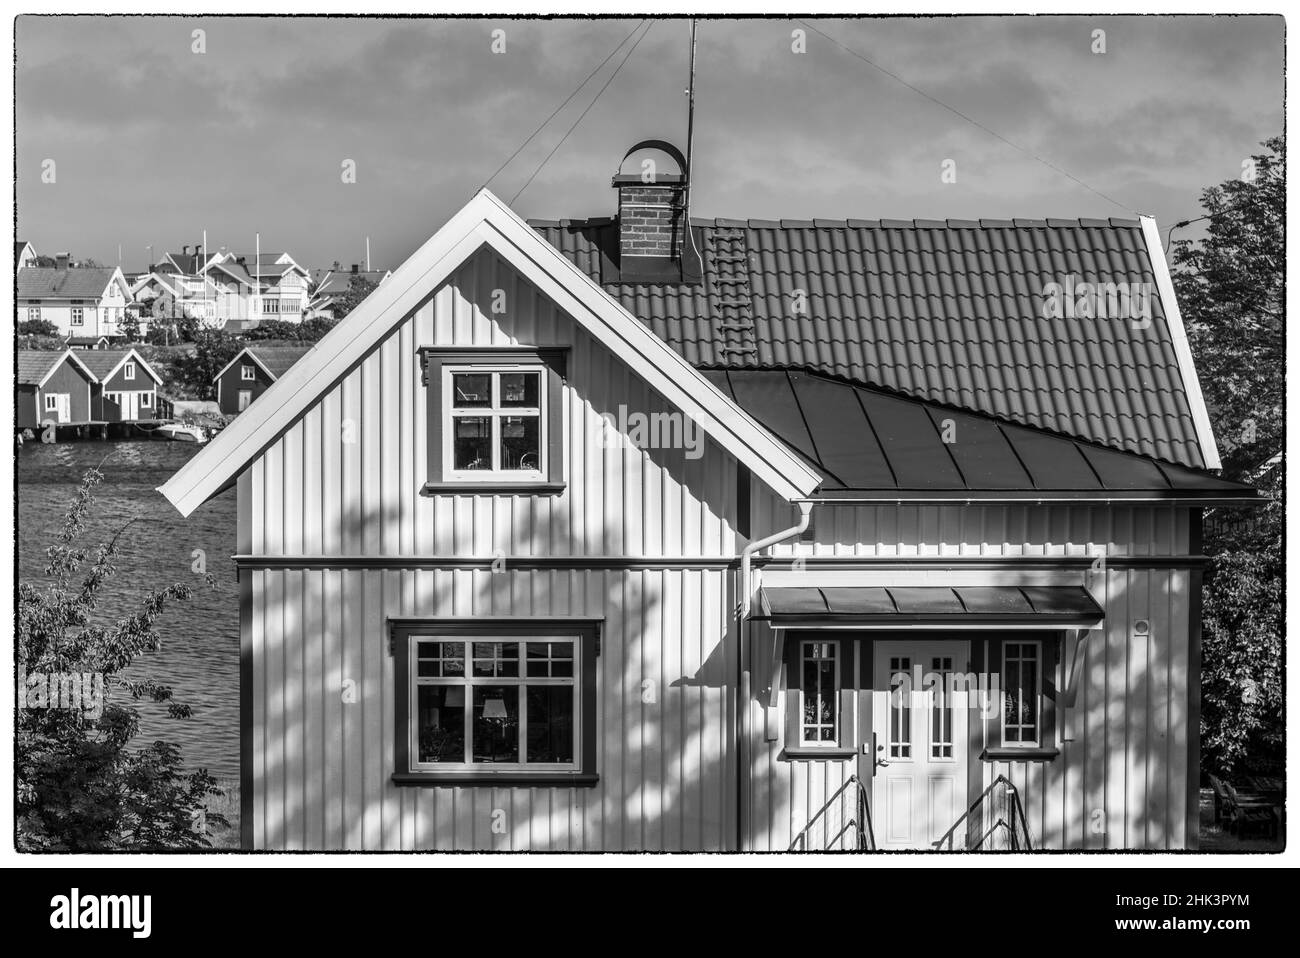 Sweden, Bohuslan, Hovenaset, village house detail Stock Photo